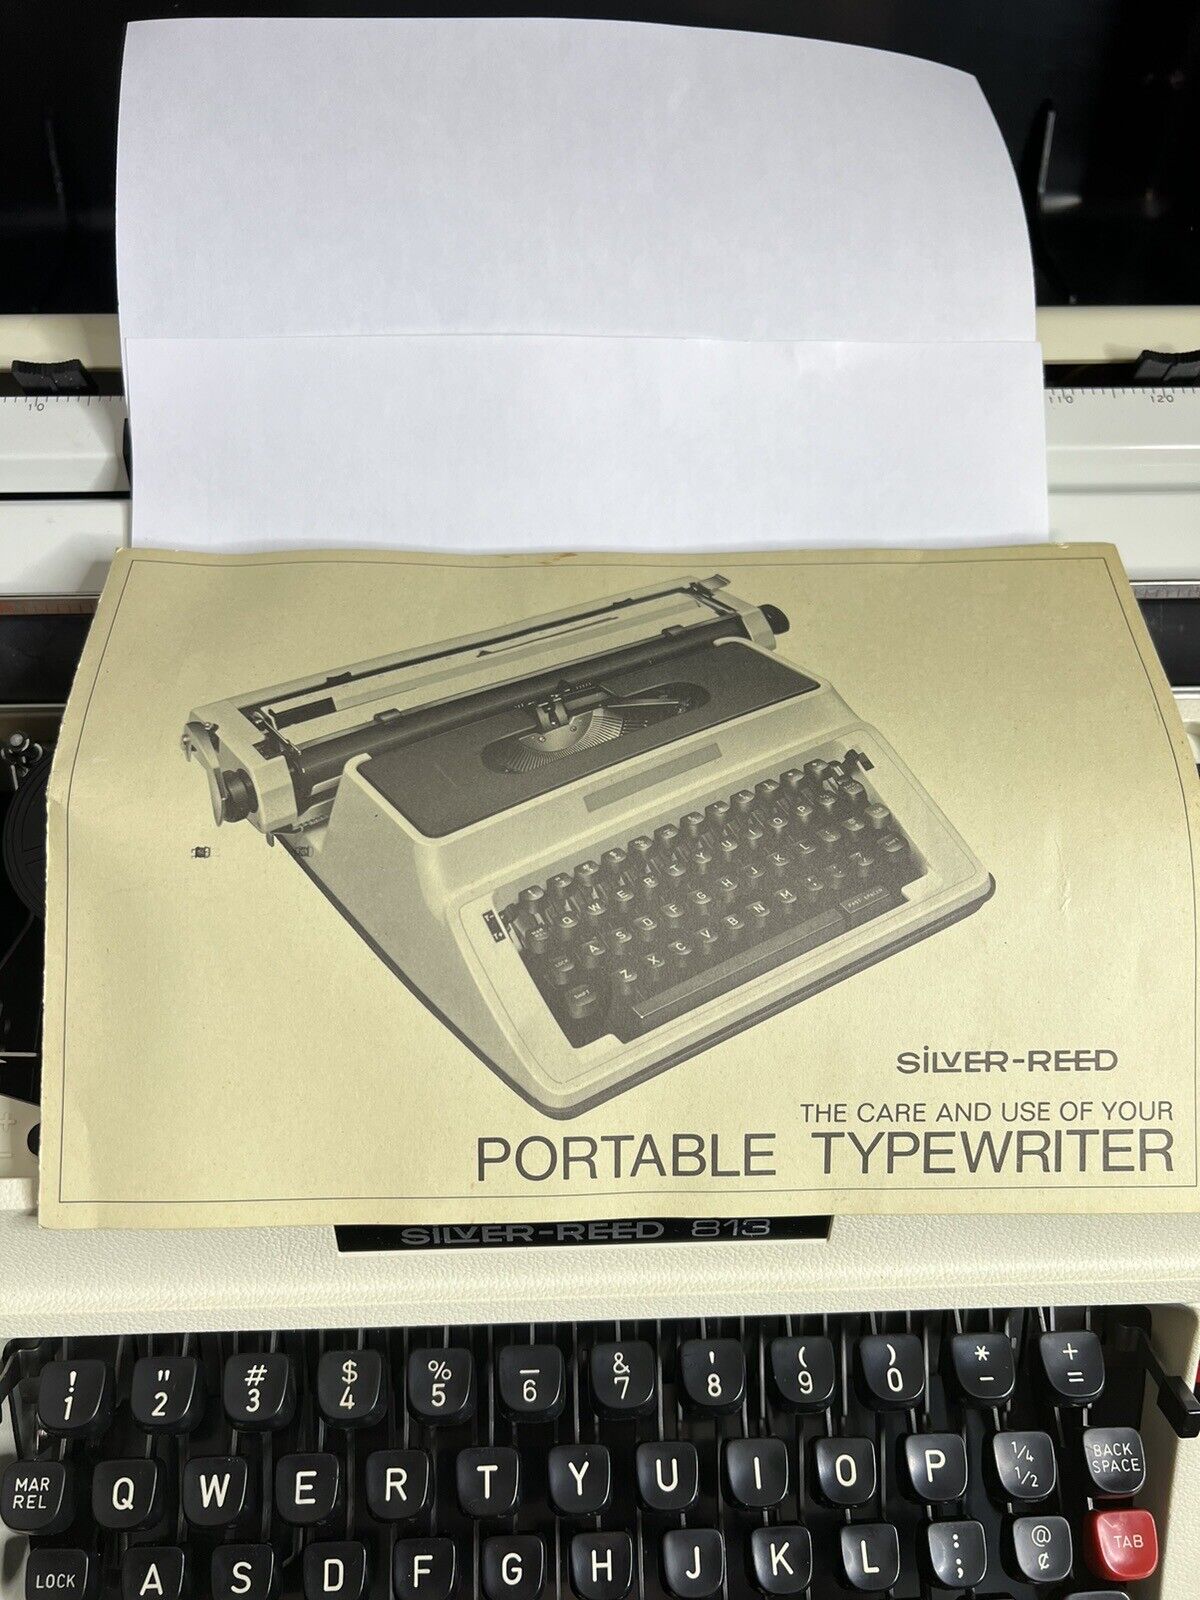 Silver Reed 813 Manual Typewriter Portable Hard Case Tested Works Needs Ribbon